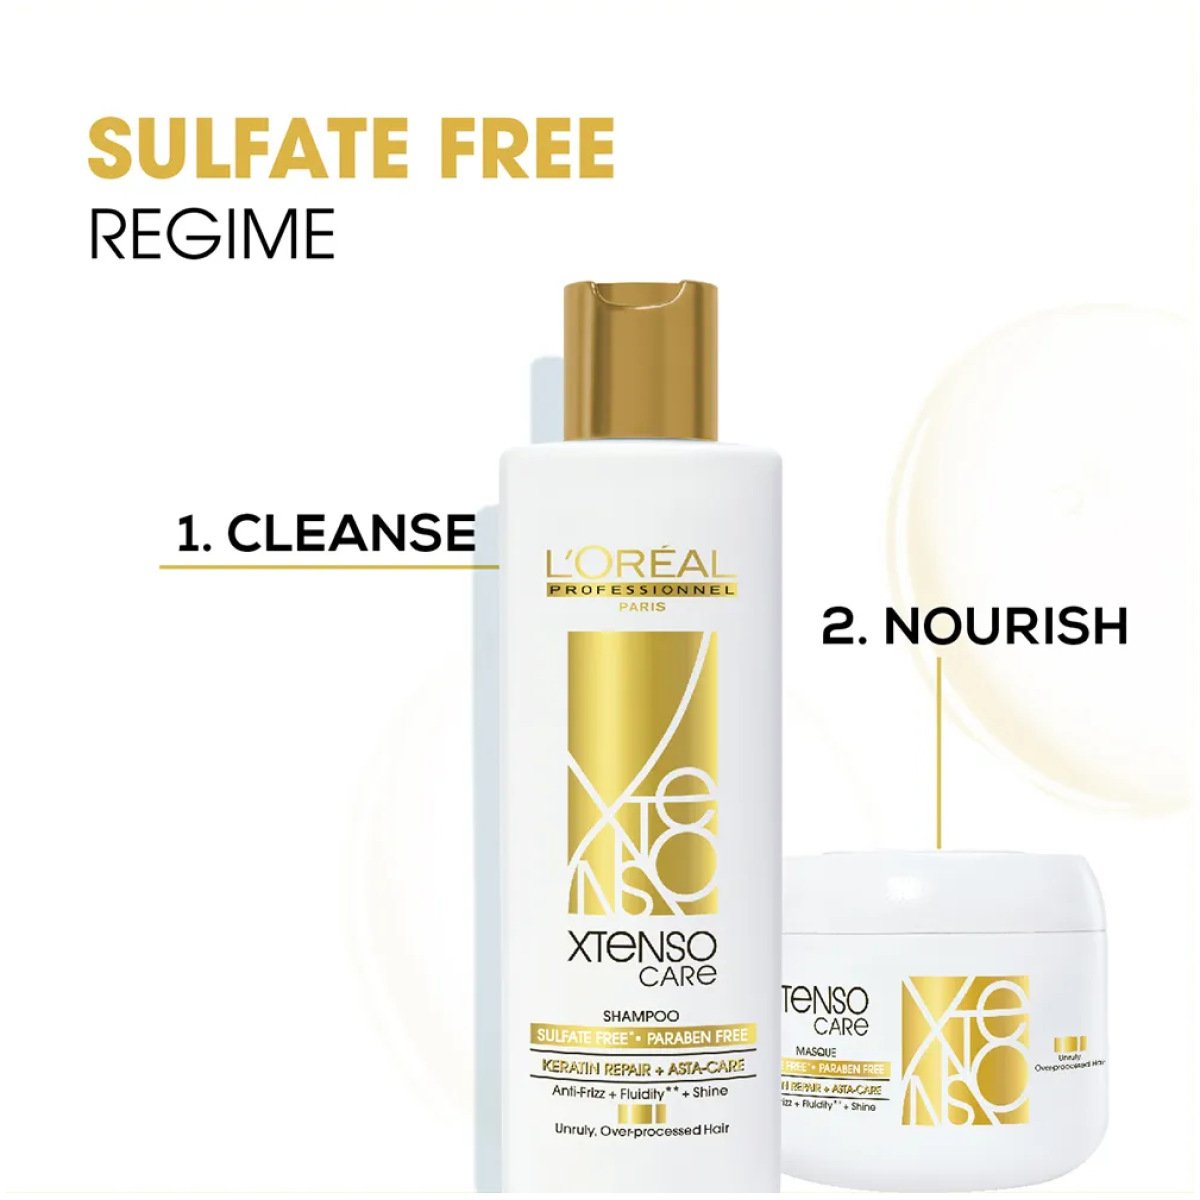 L'Oreal Professional X-tenso Xtenso Sulfate-Free Care Shampoo 250ml